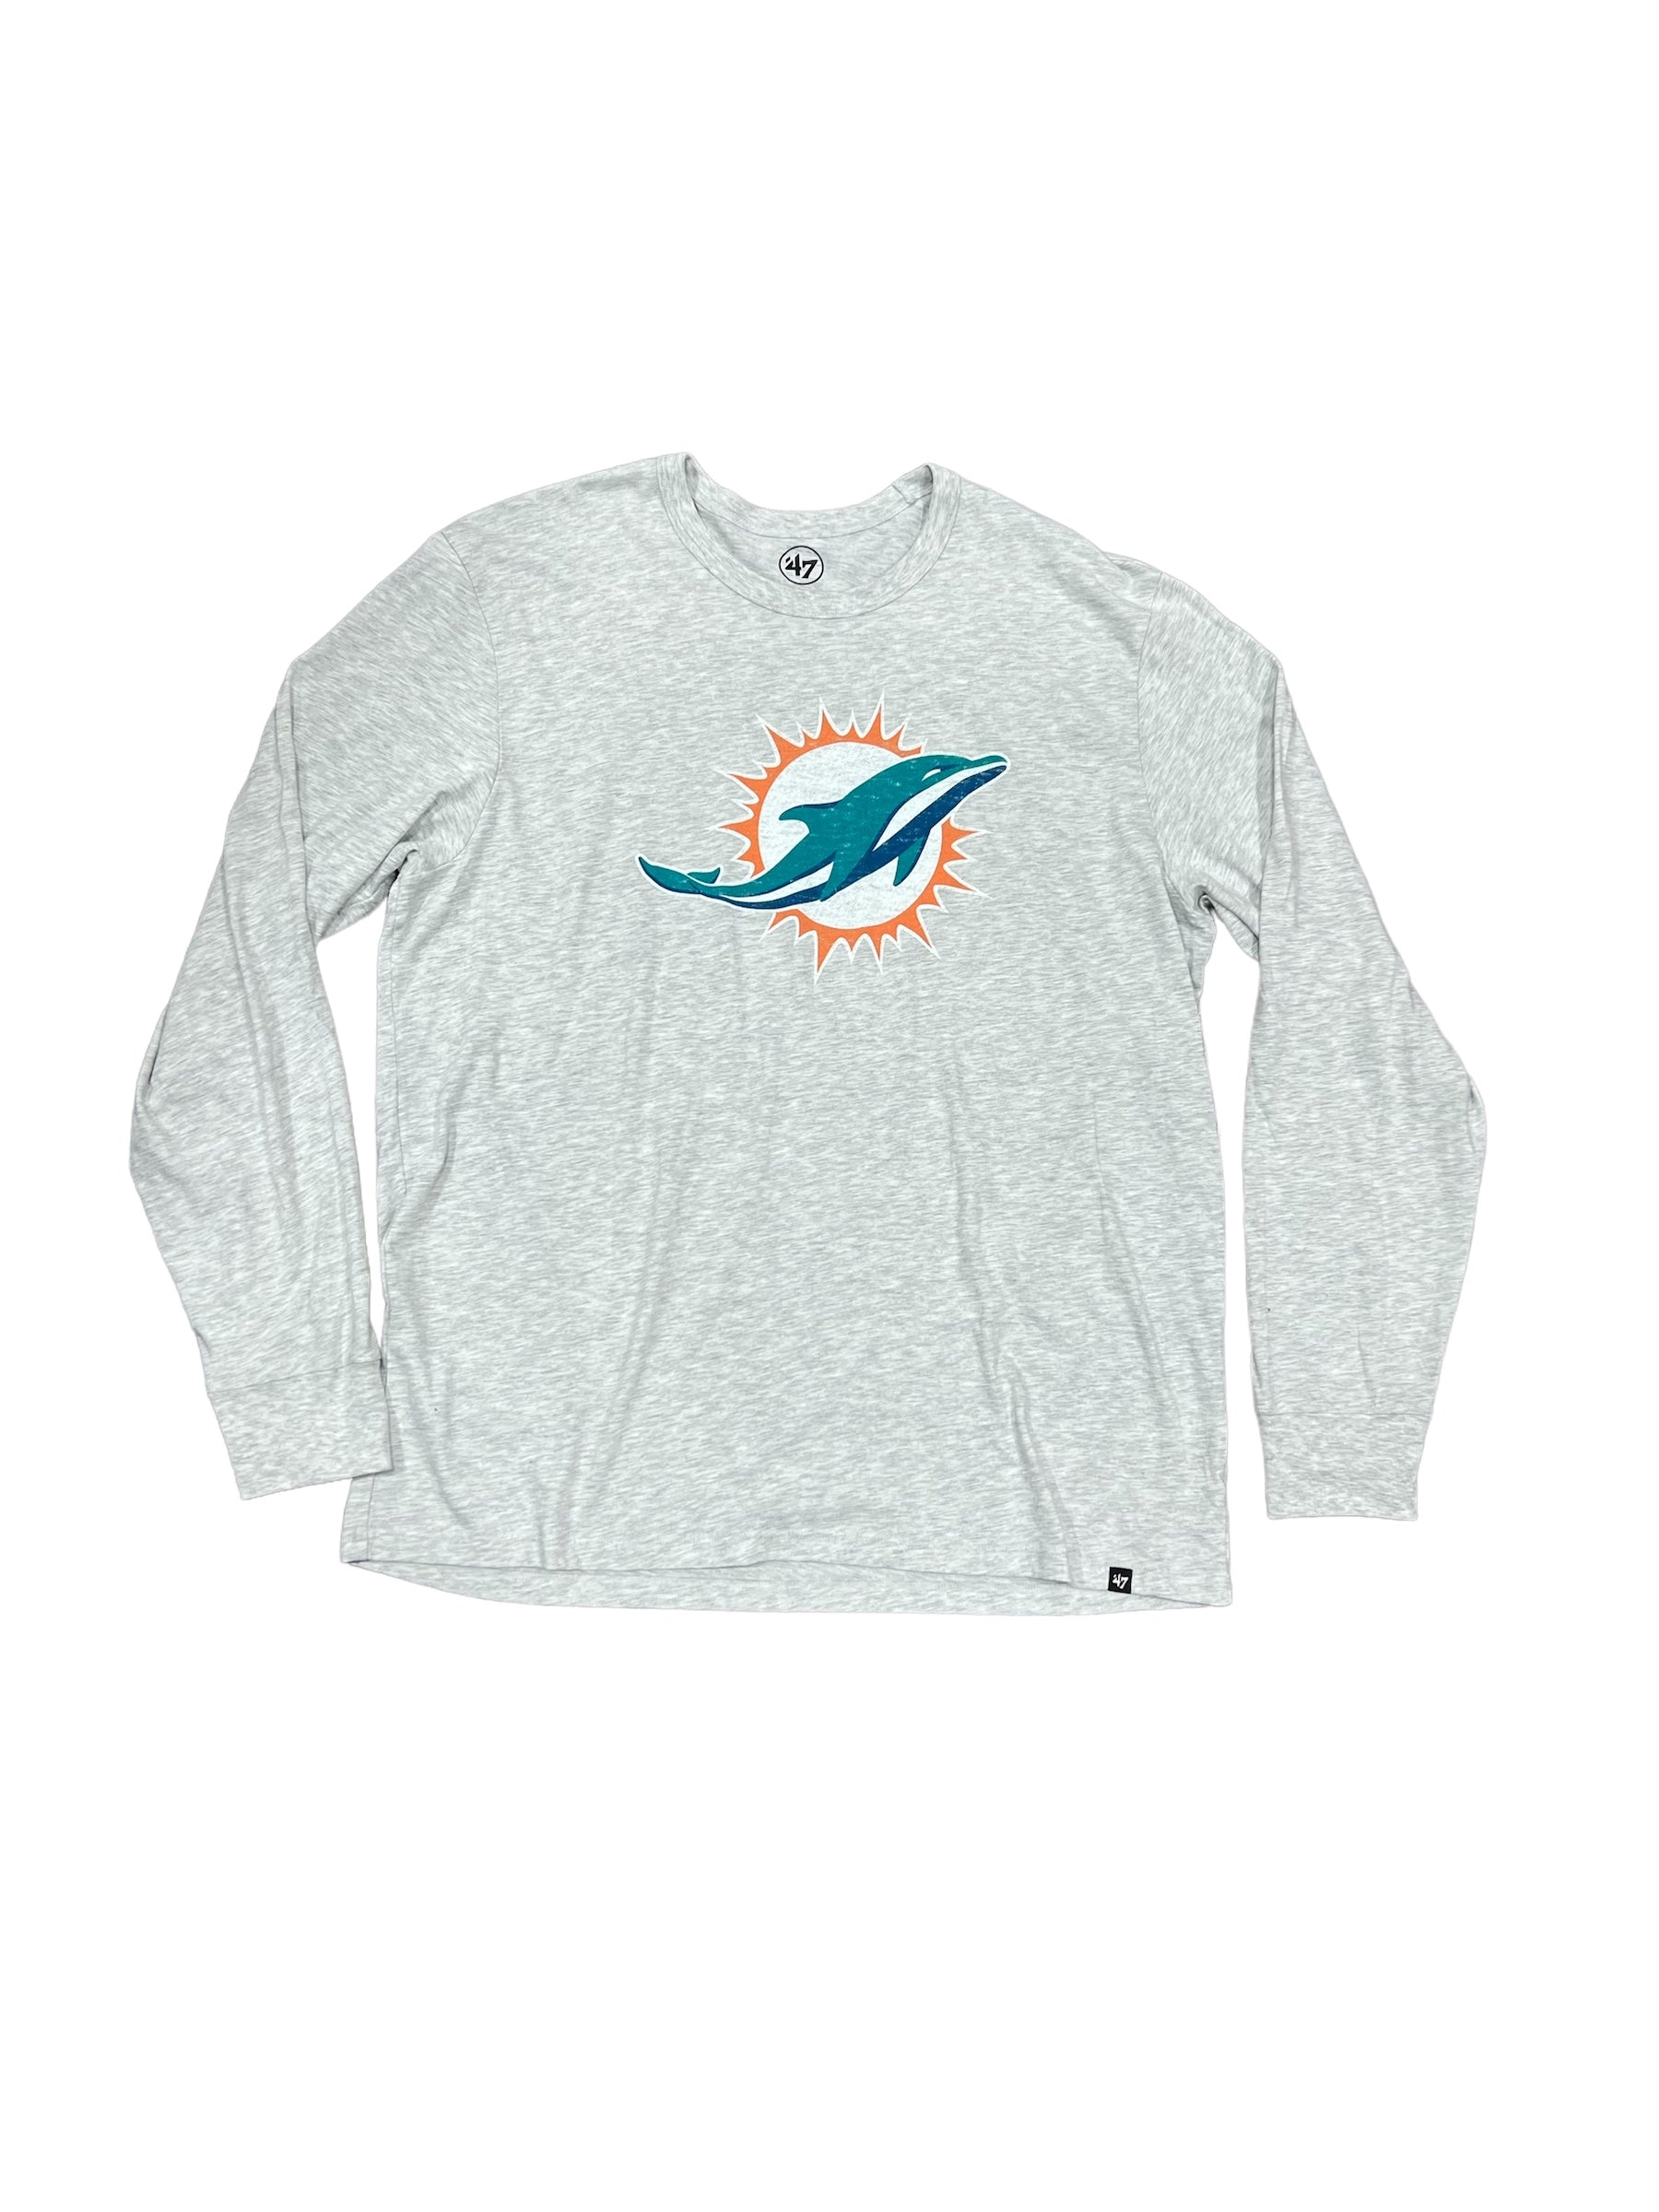 Miami Dolphins '47 Primary Logo Relay Premier Franklin L/S T-Shirt - Grey